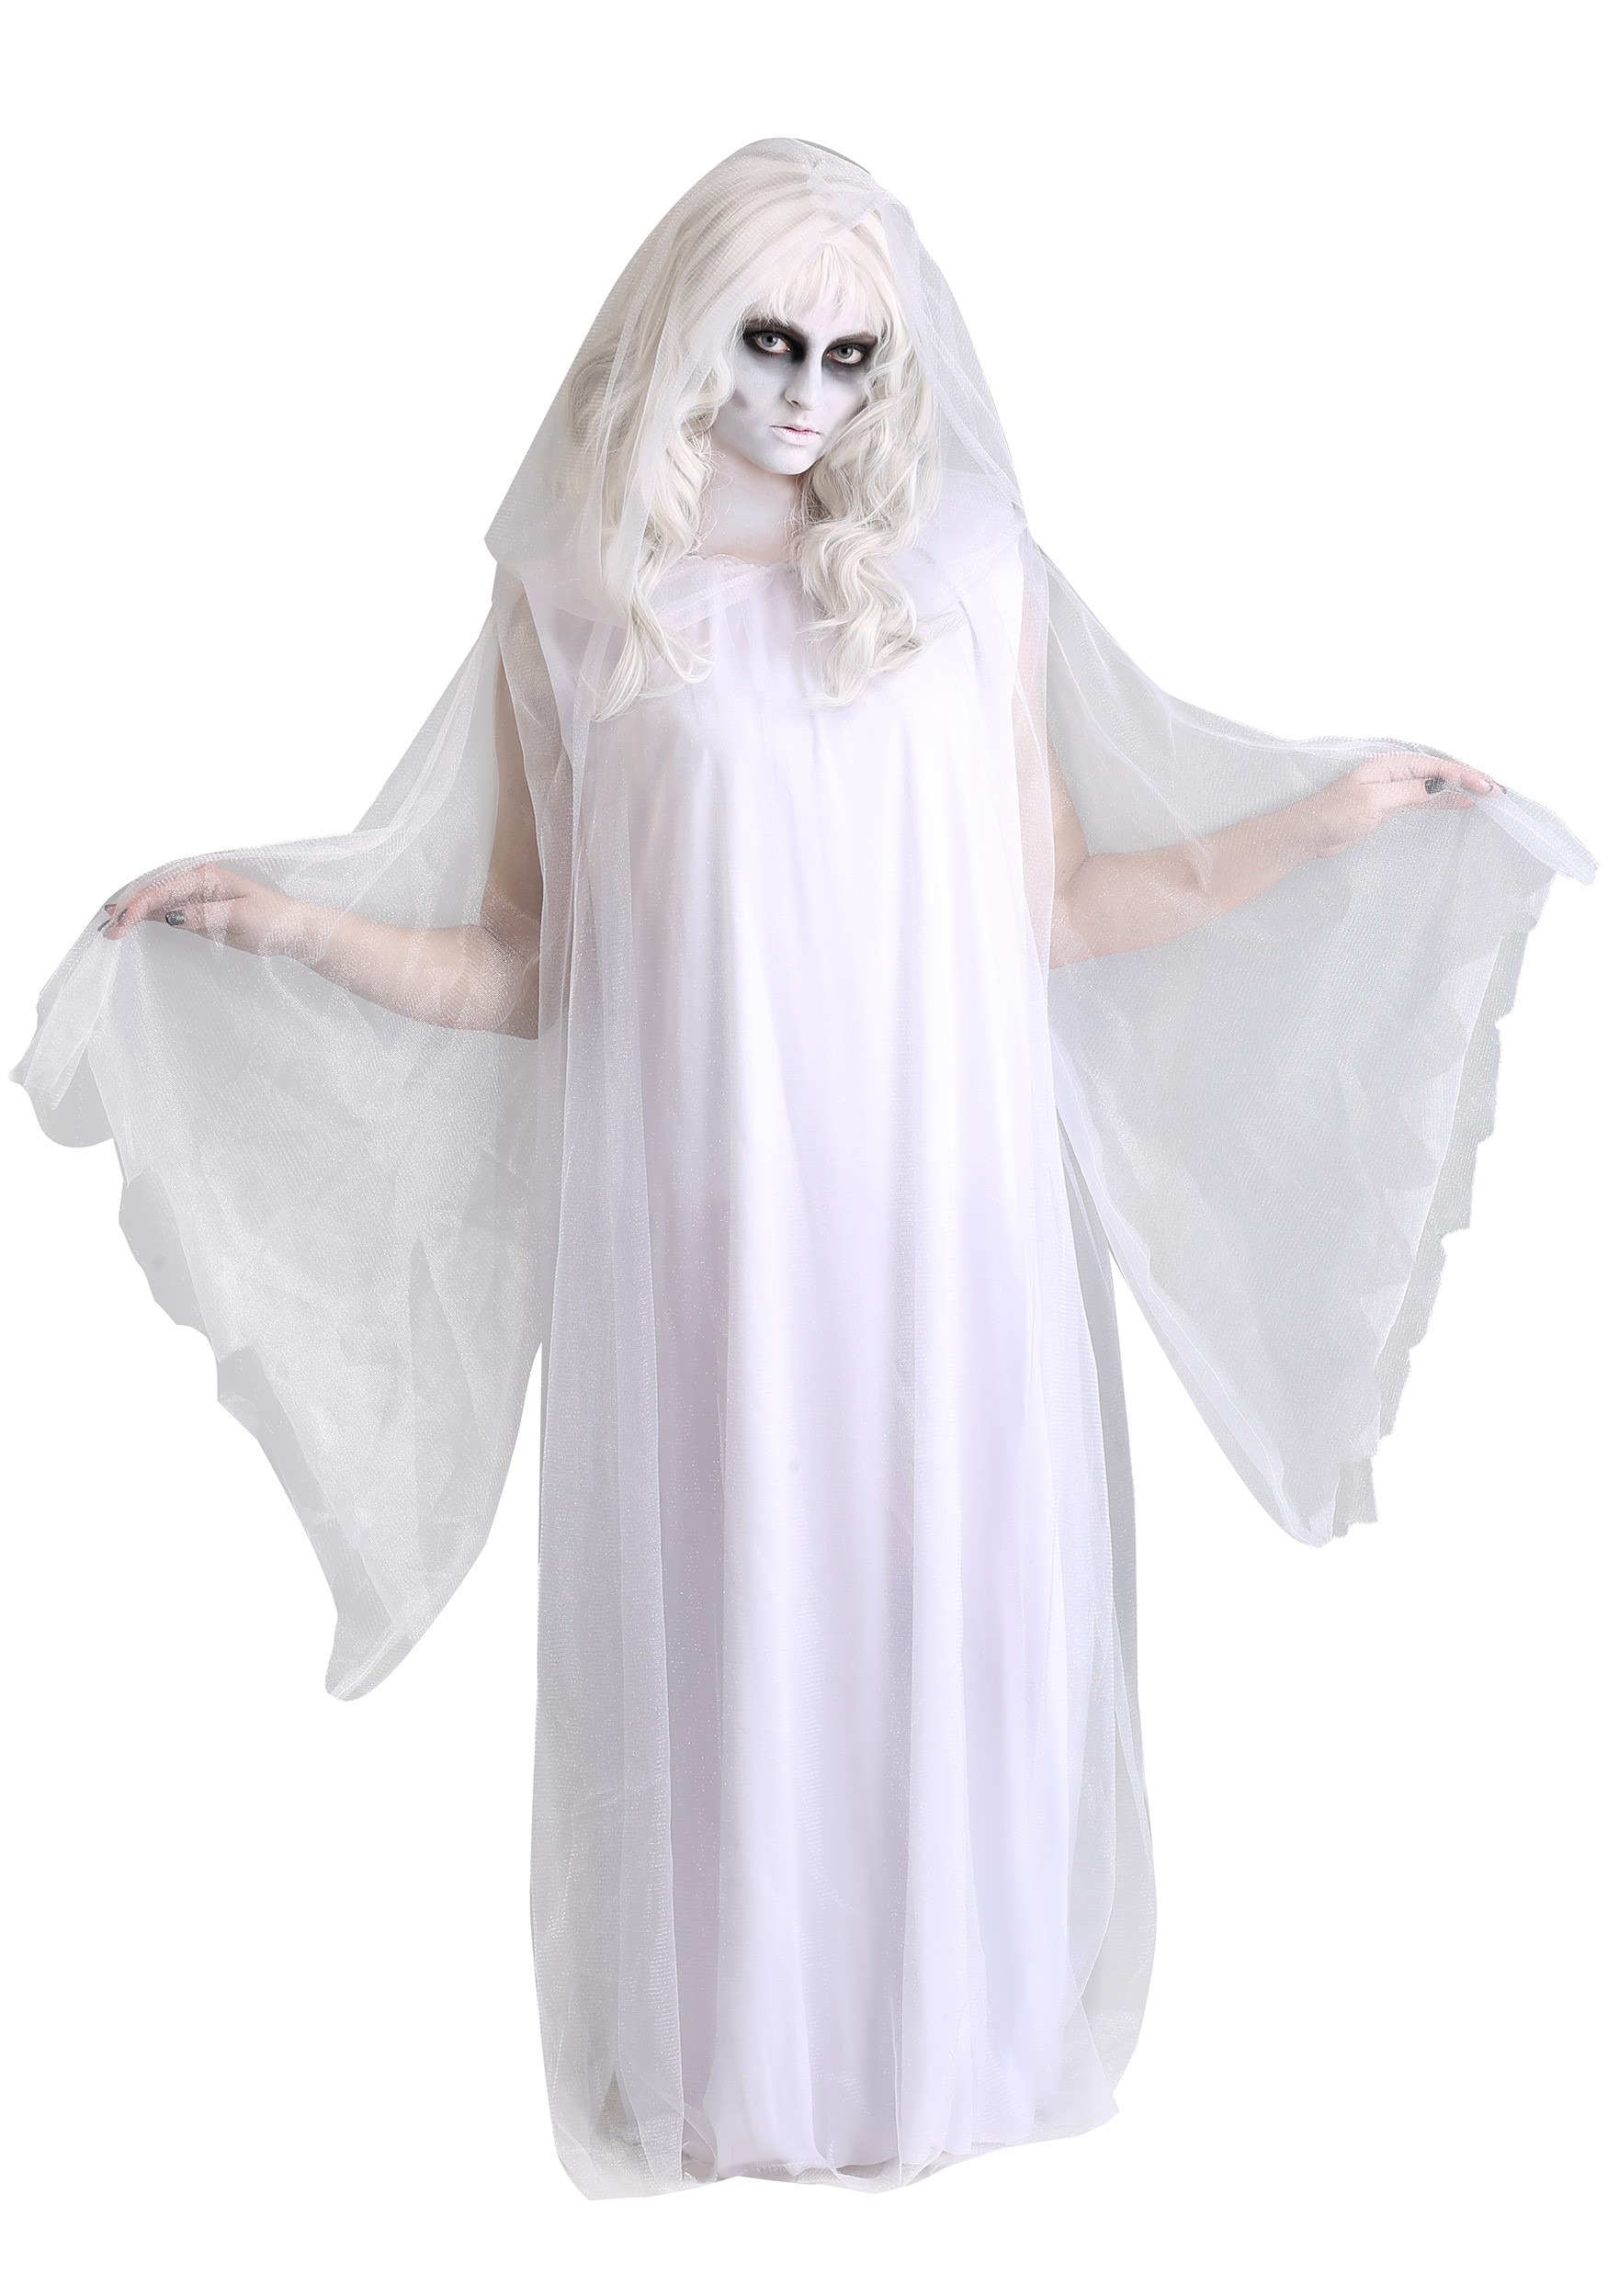 Haunting Ghost Women's Costume